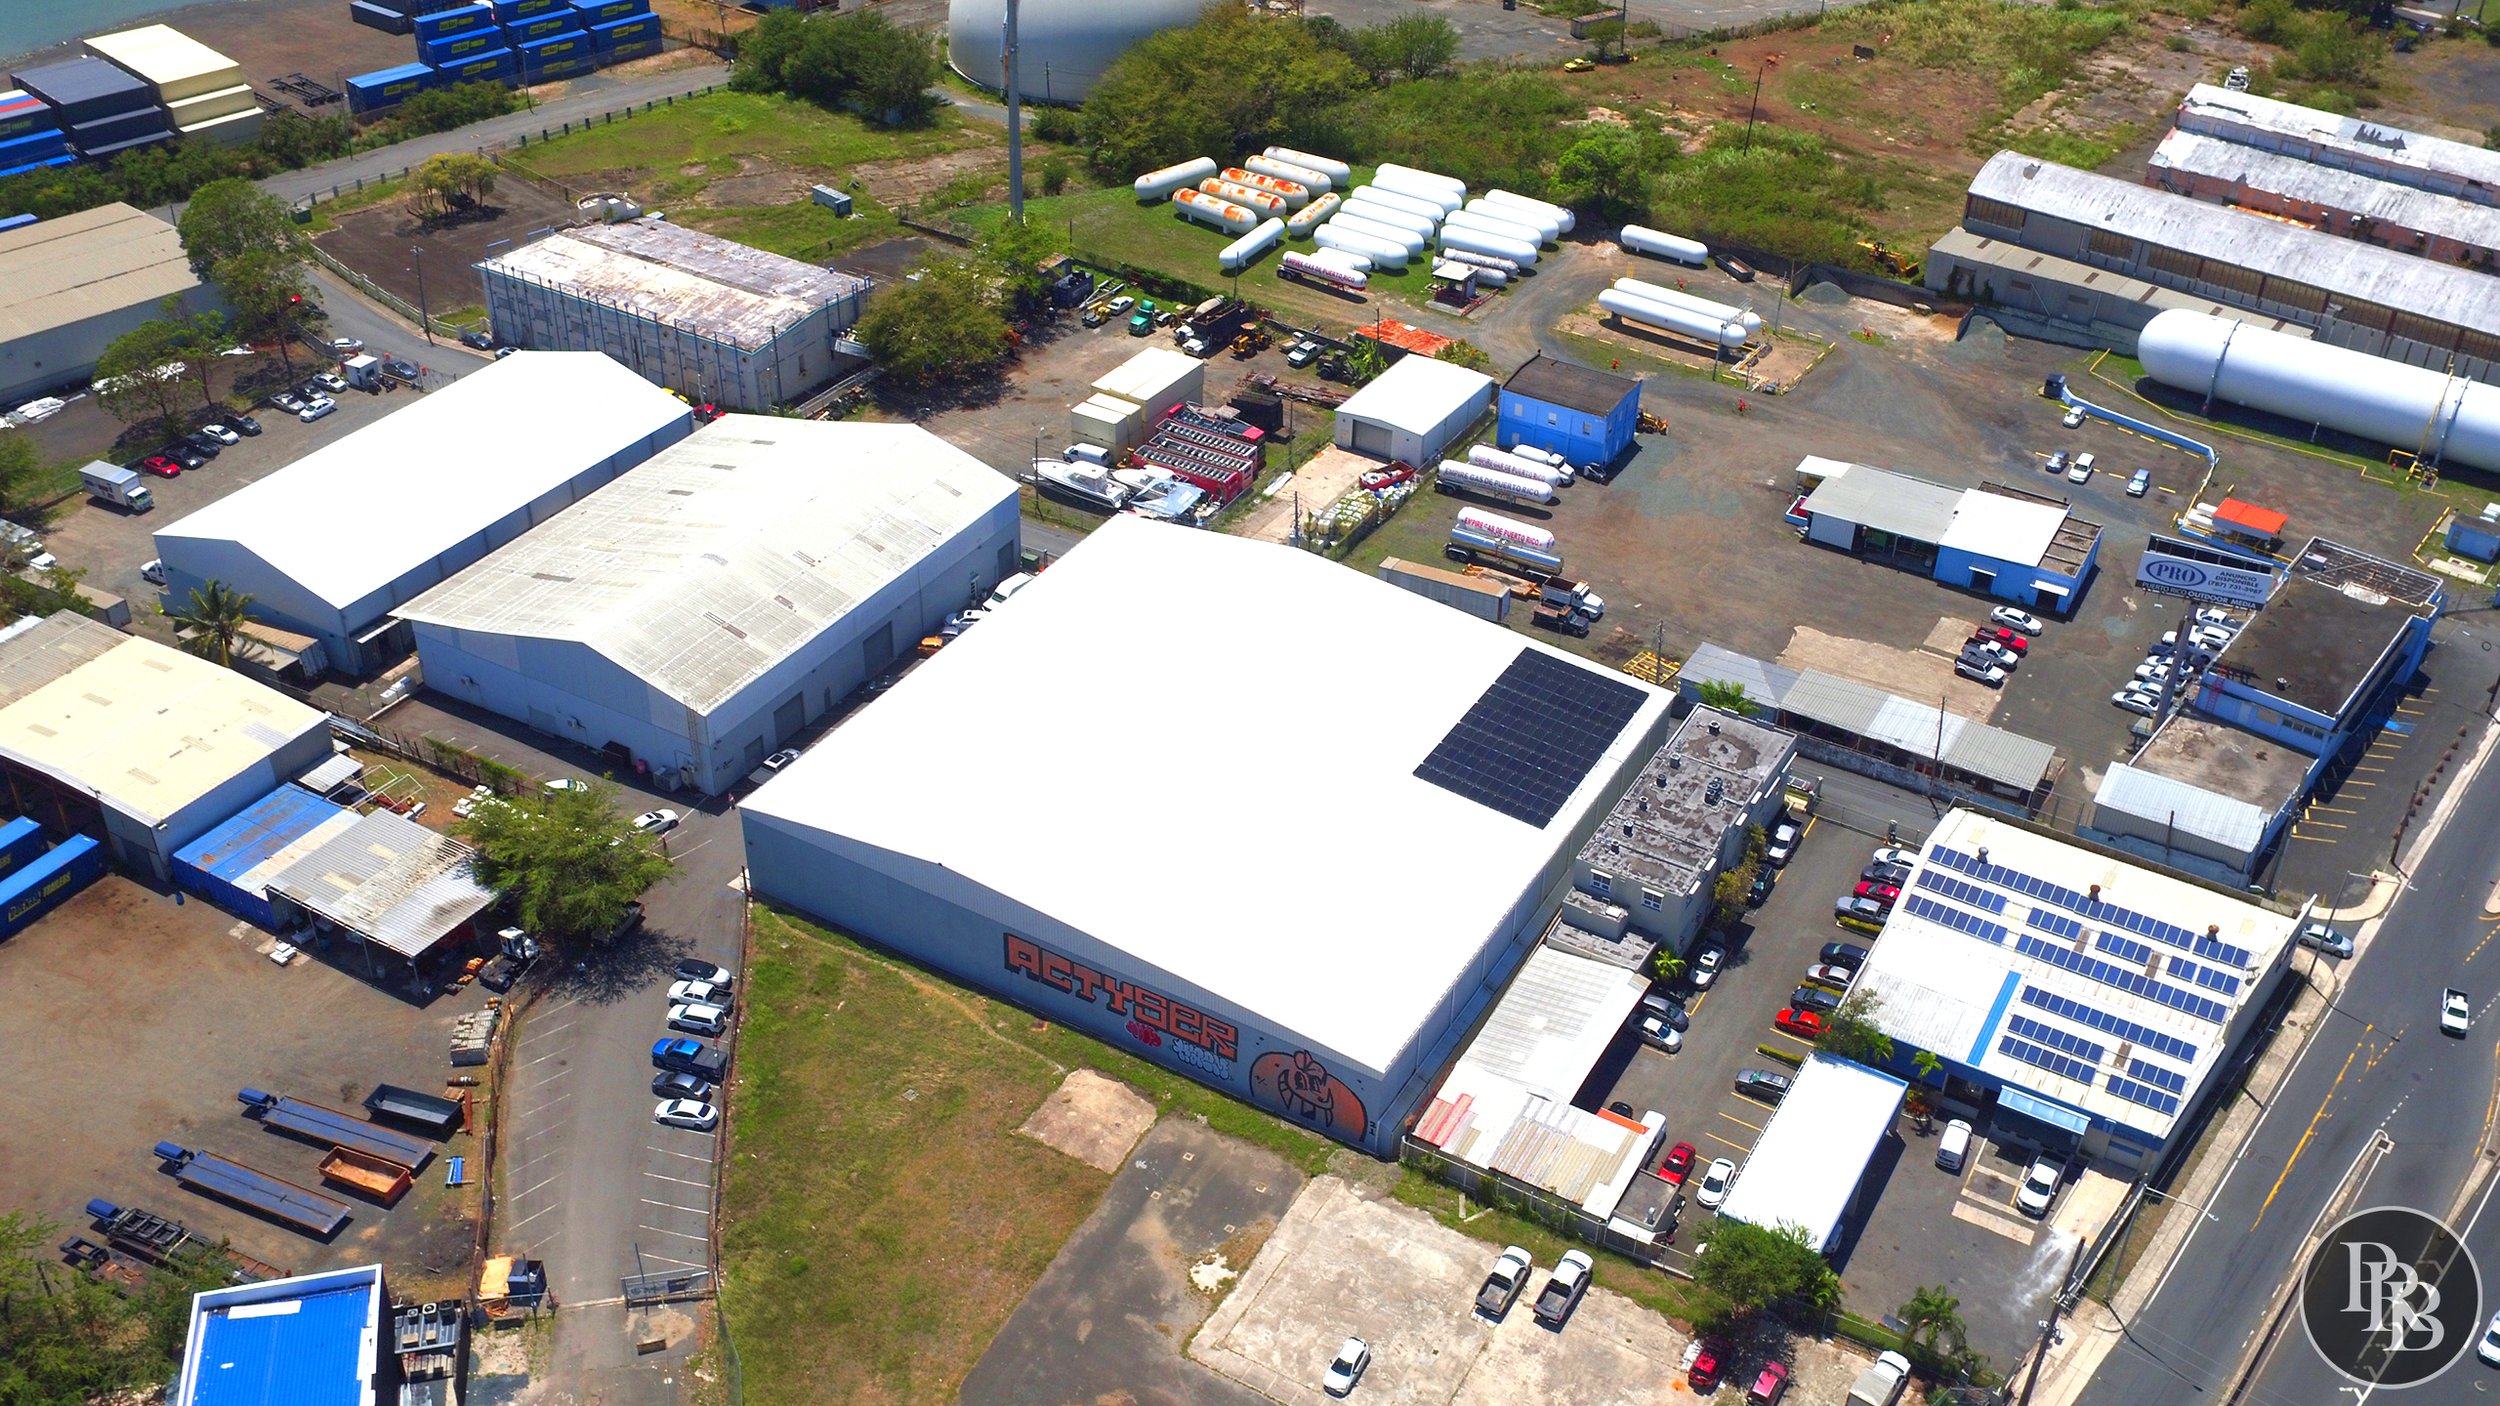 Miramar 41,000 sqft warehouse PRB logo #5.jpg